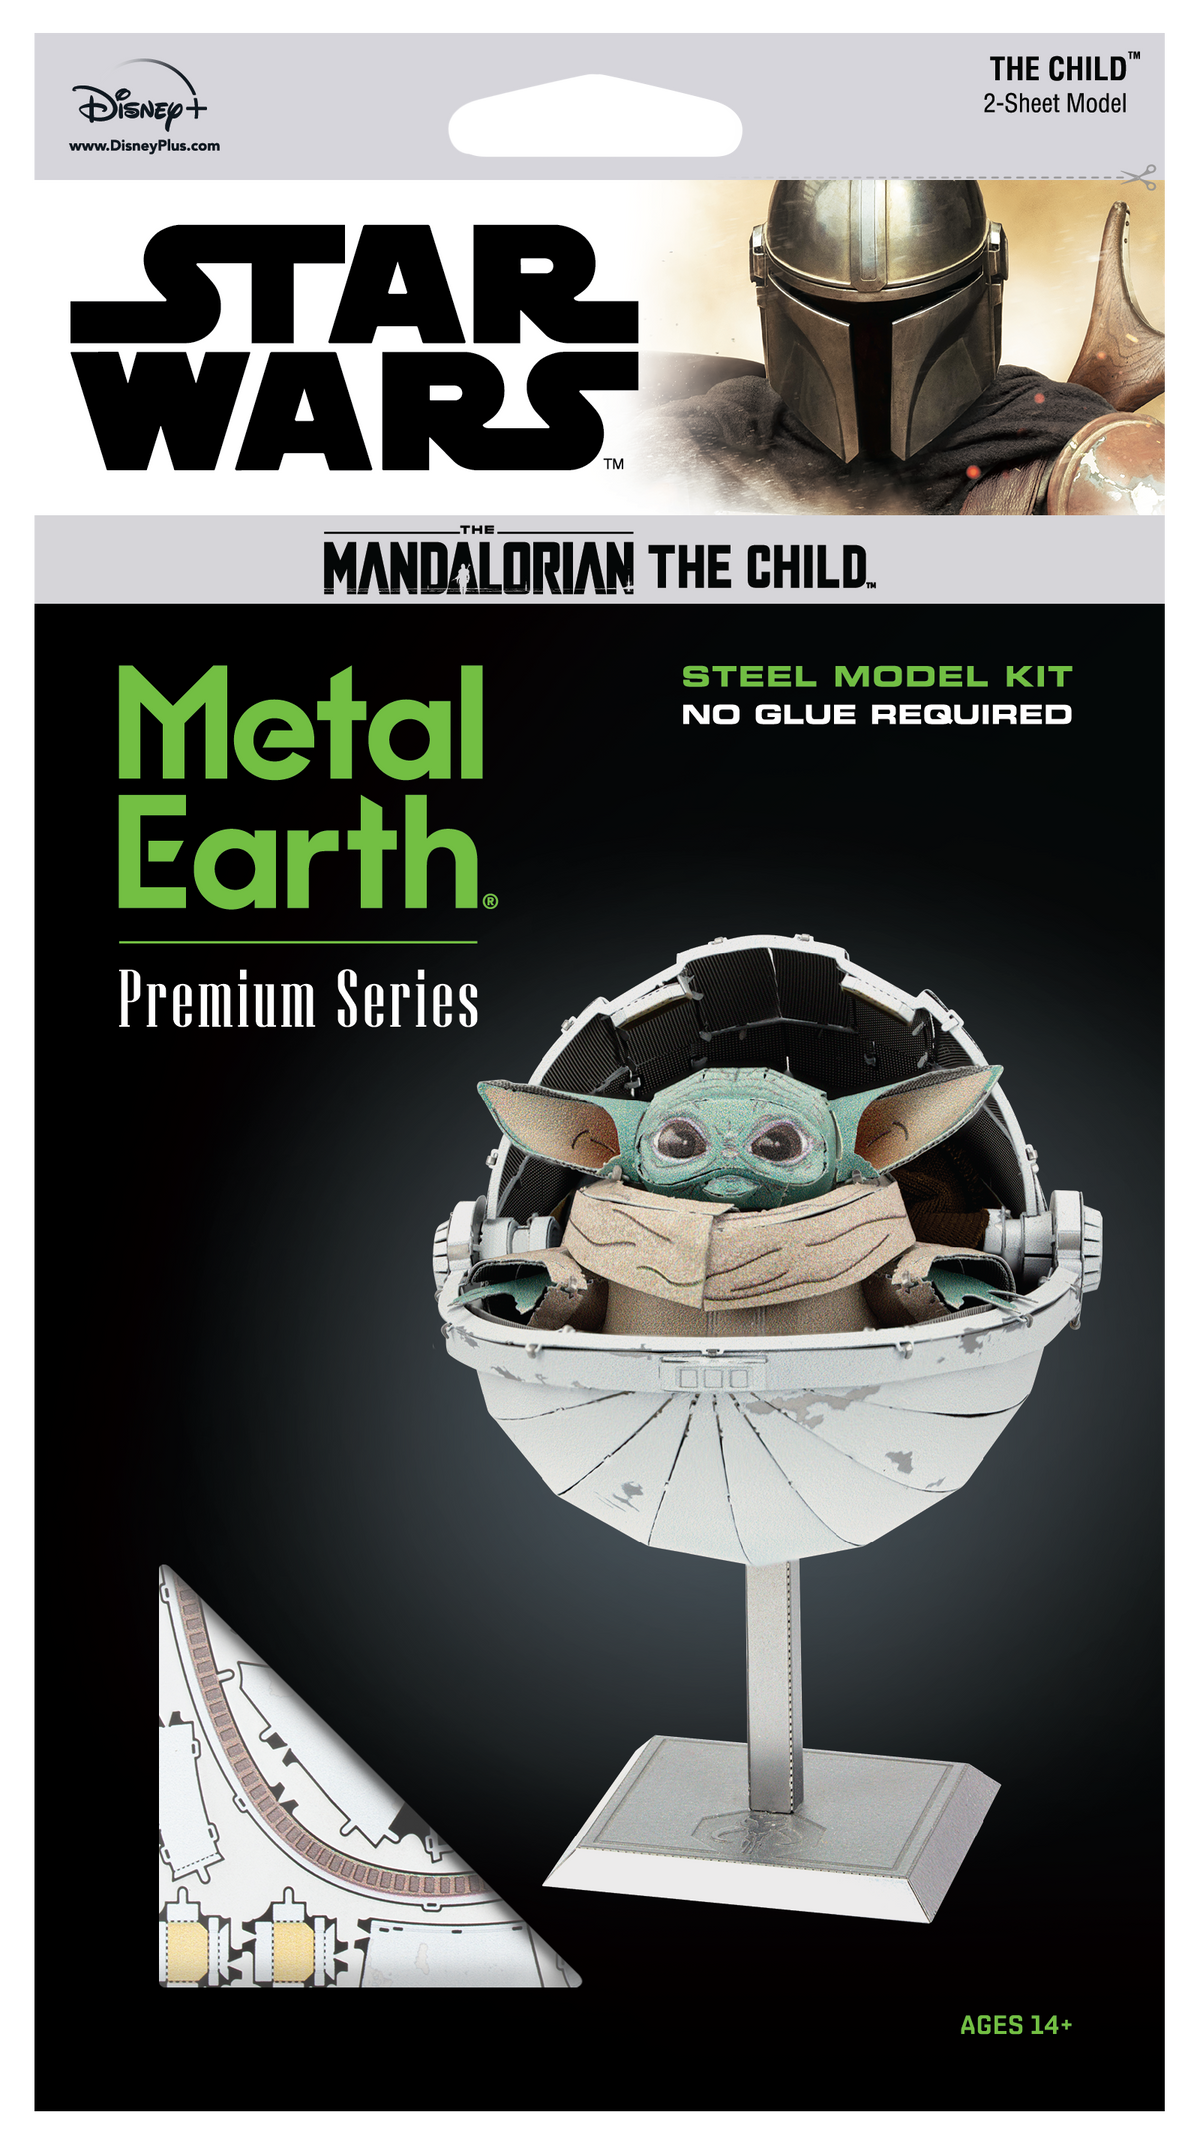 Metal Earth - Premium Series - Star Wars: The Child Model Kit